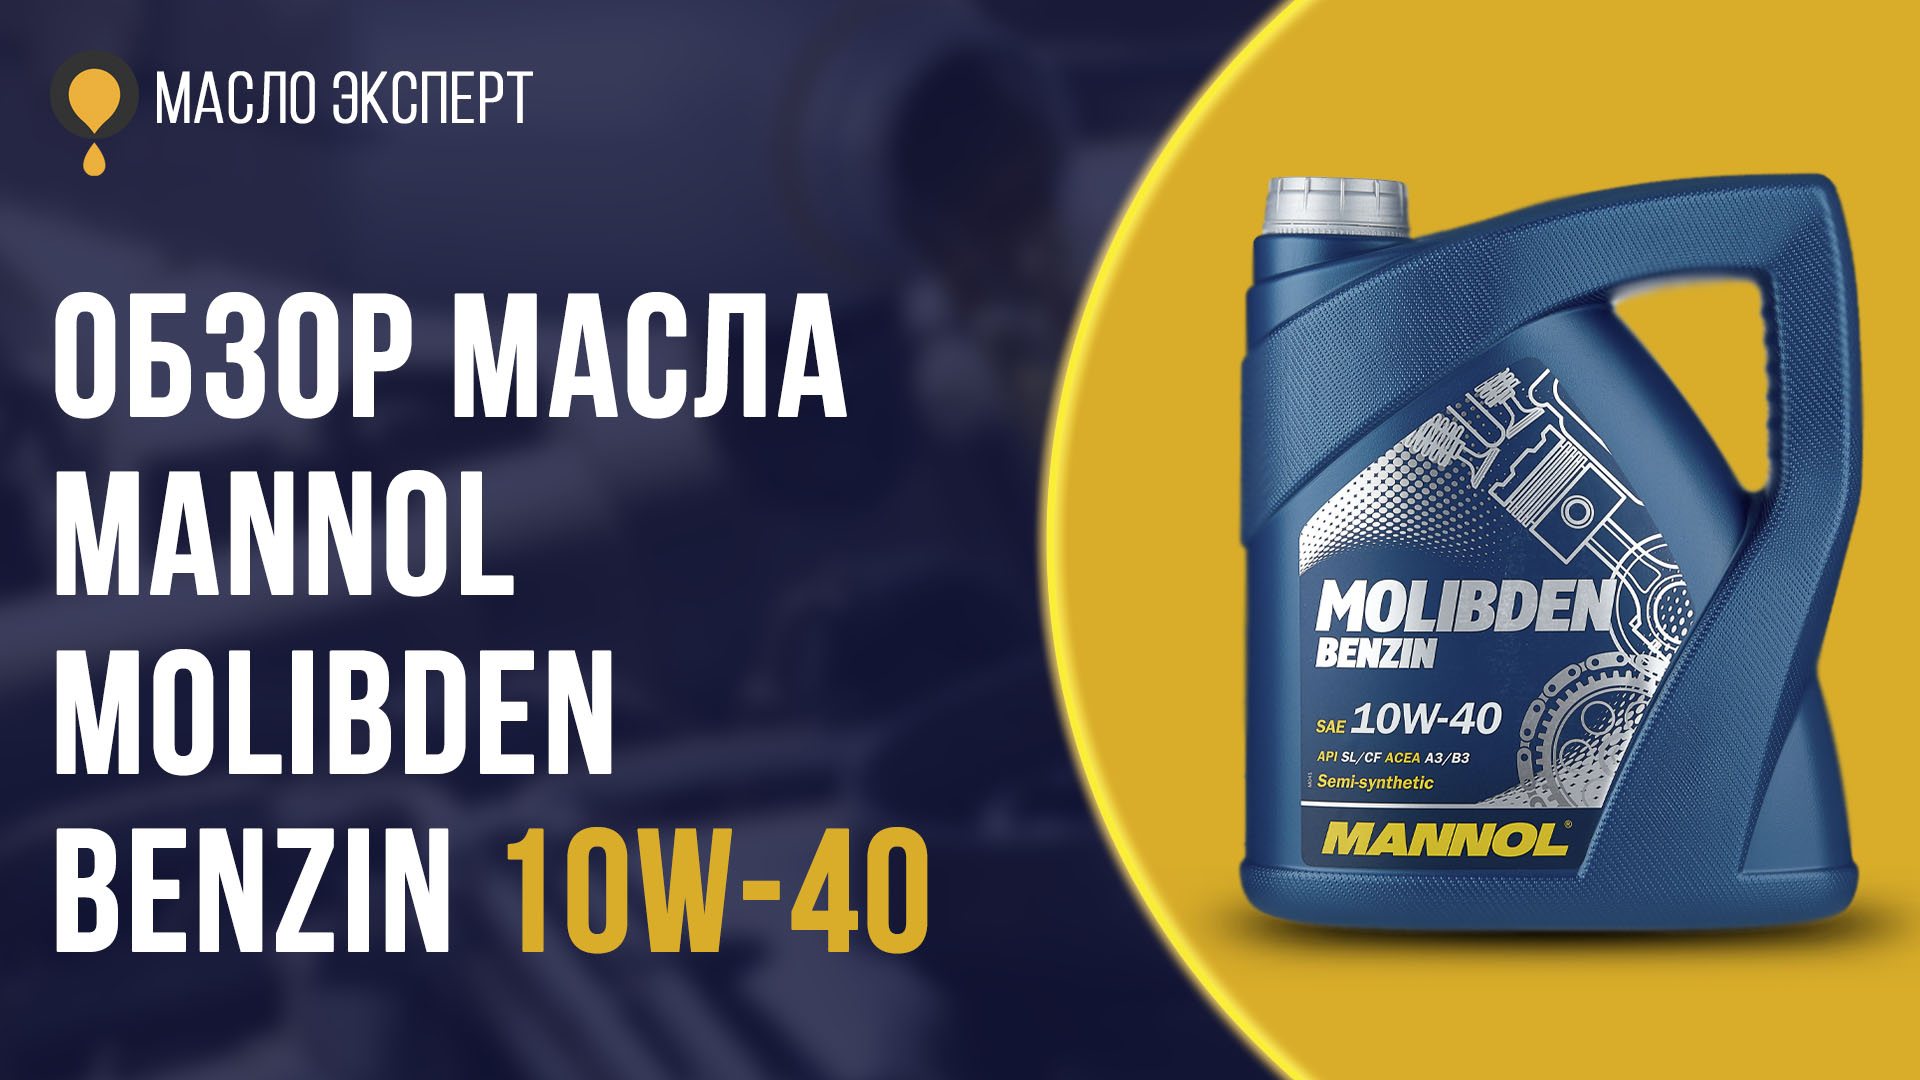 Обзор масла Mannol Molibden Benzin 10W-40 - характеристики отзывы плюсы и минусы